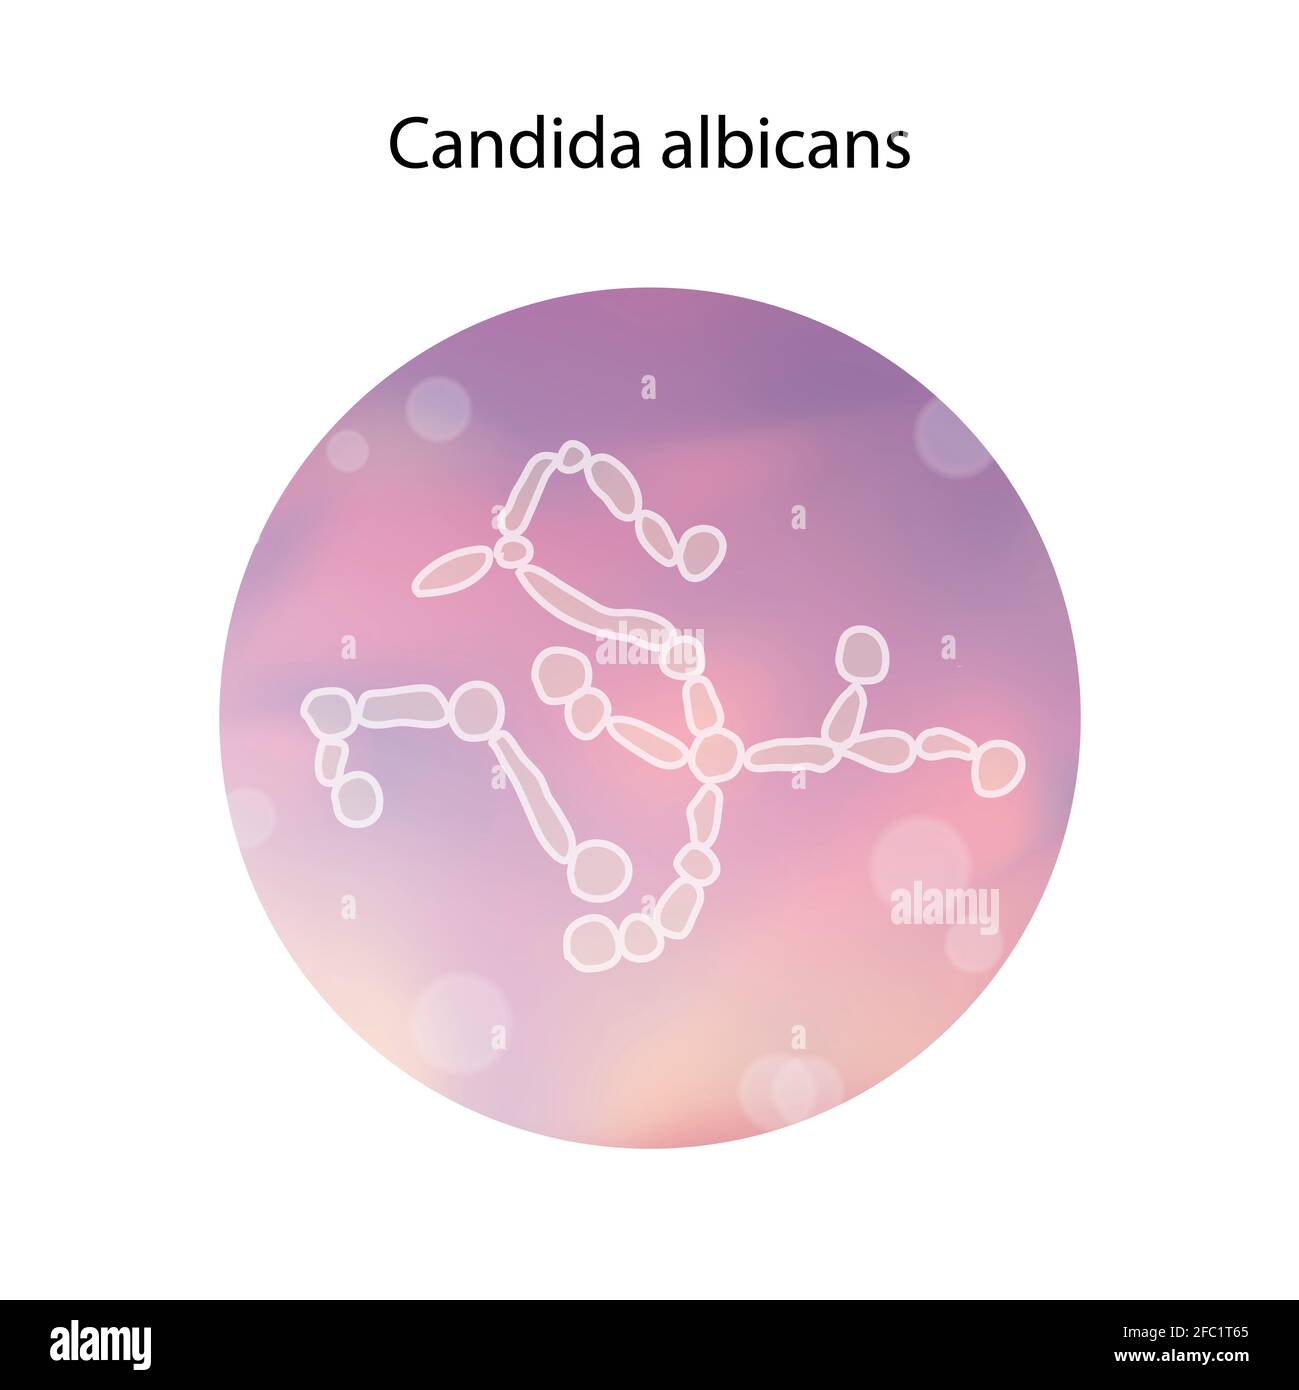 Candida albicans, illustration Stock Photo